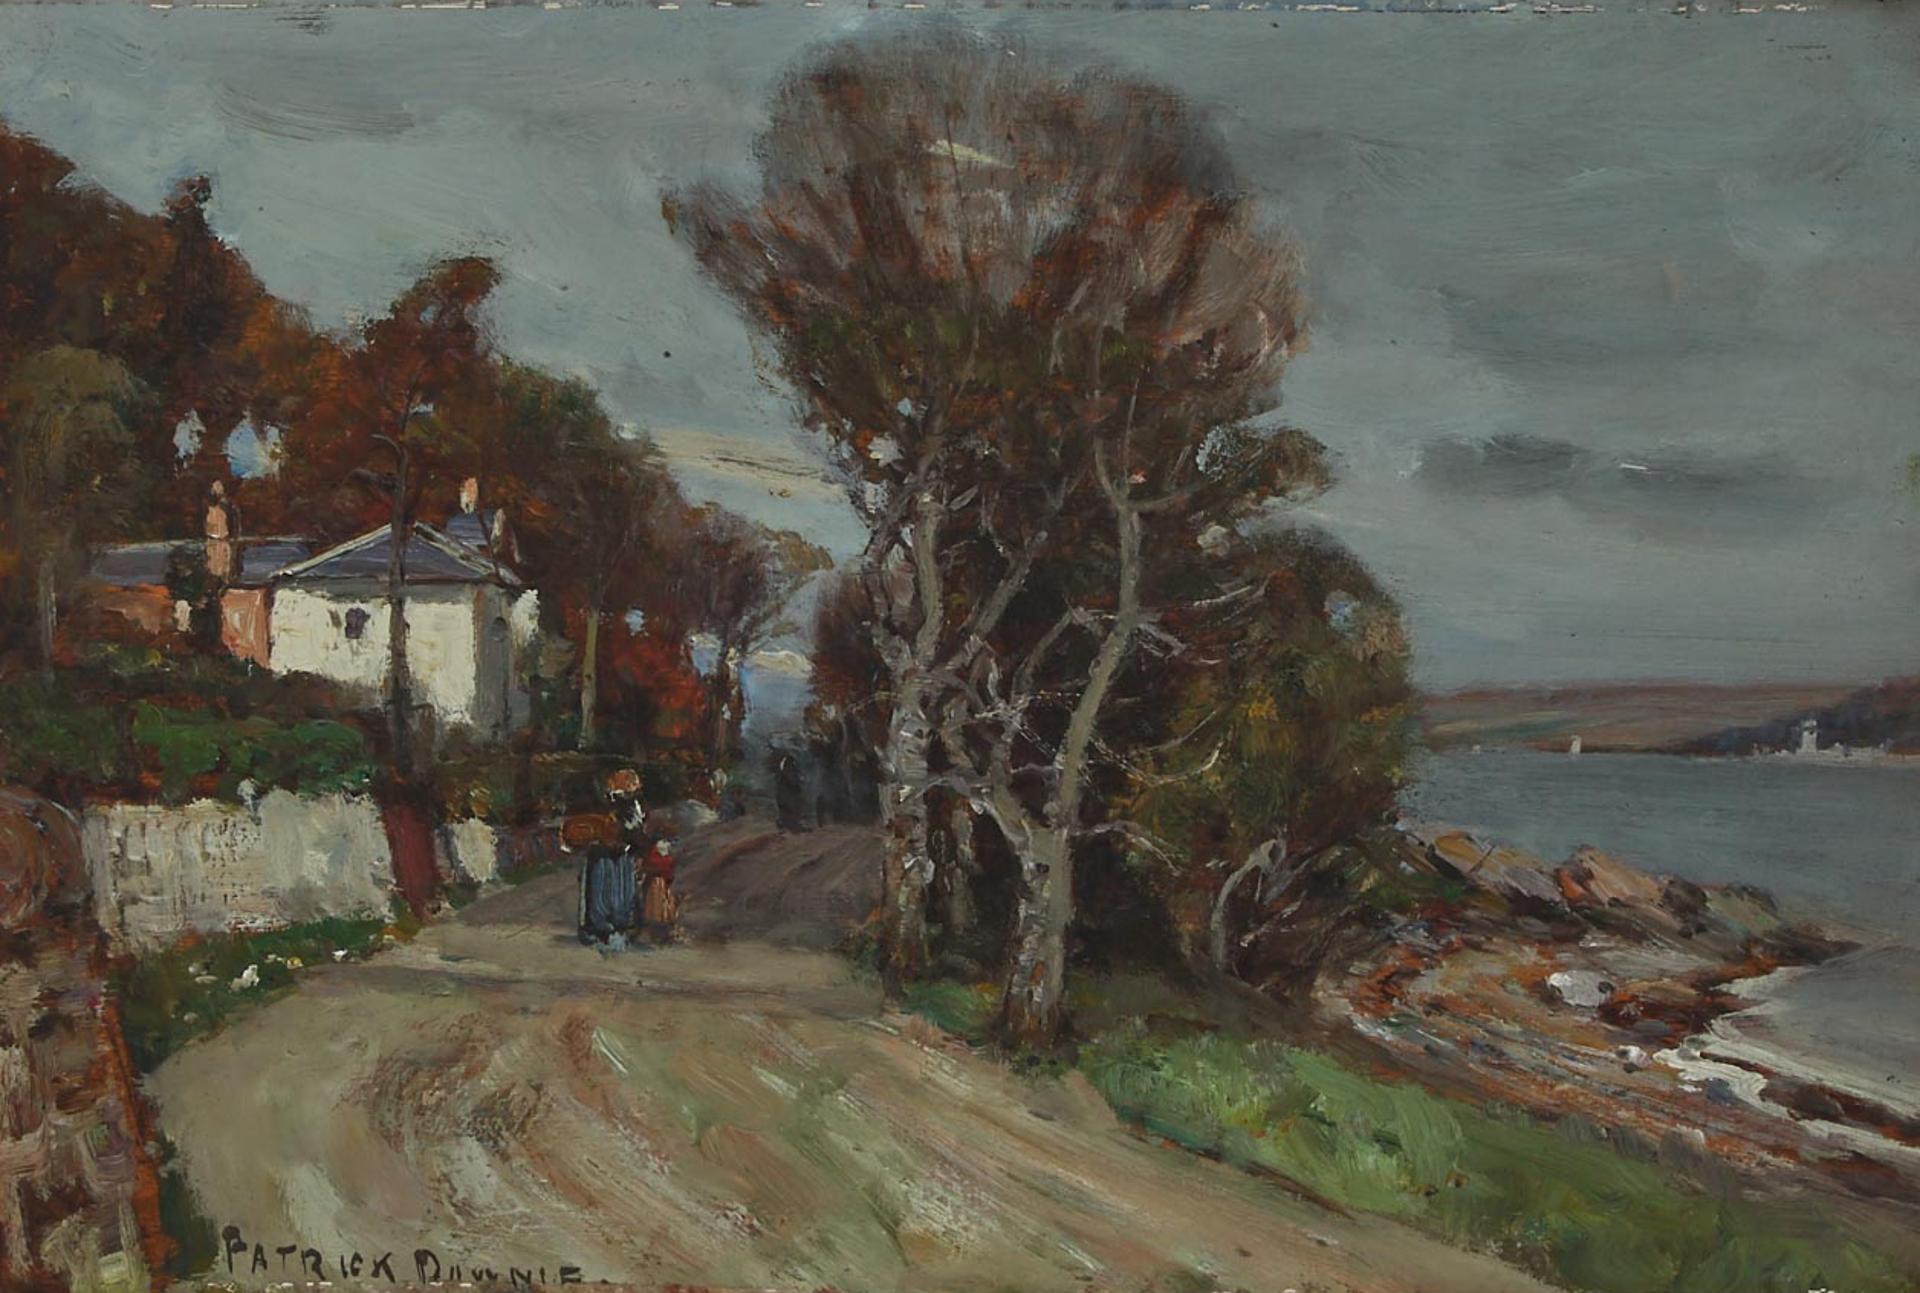 Patrick Downie (1854-1945) - Shore Road, Innellan